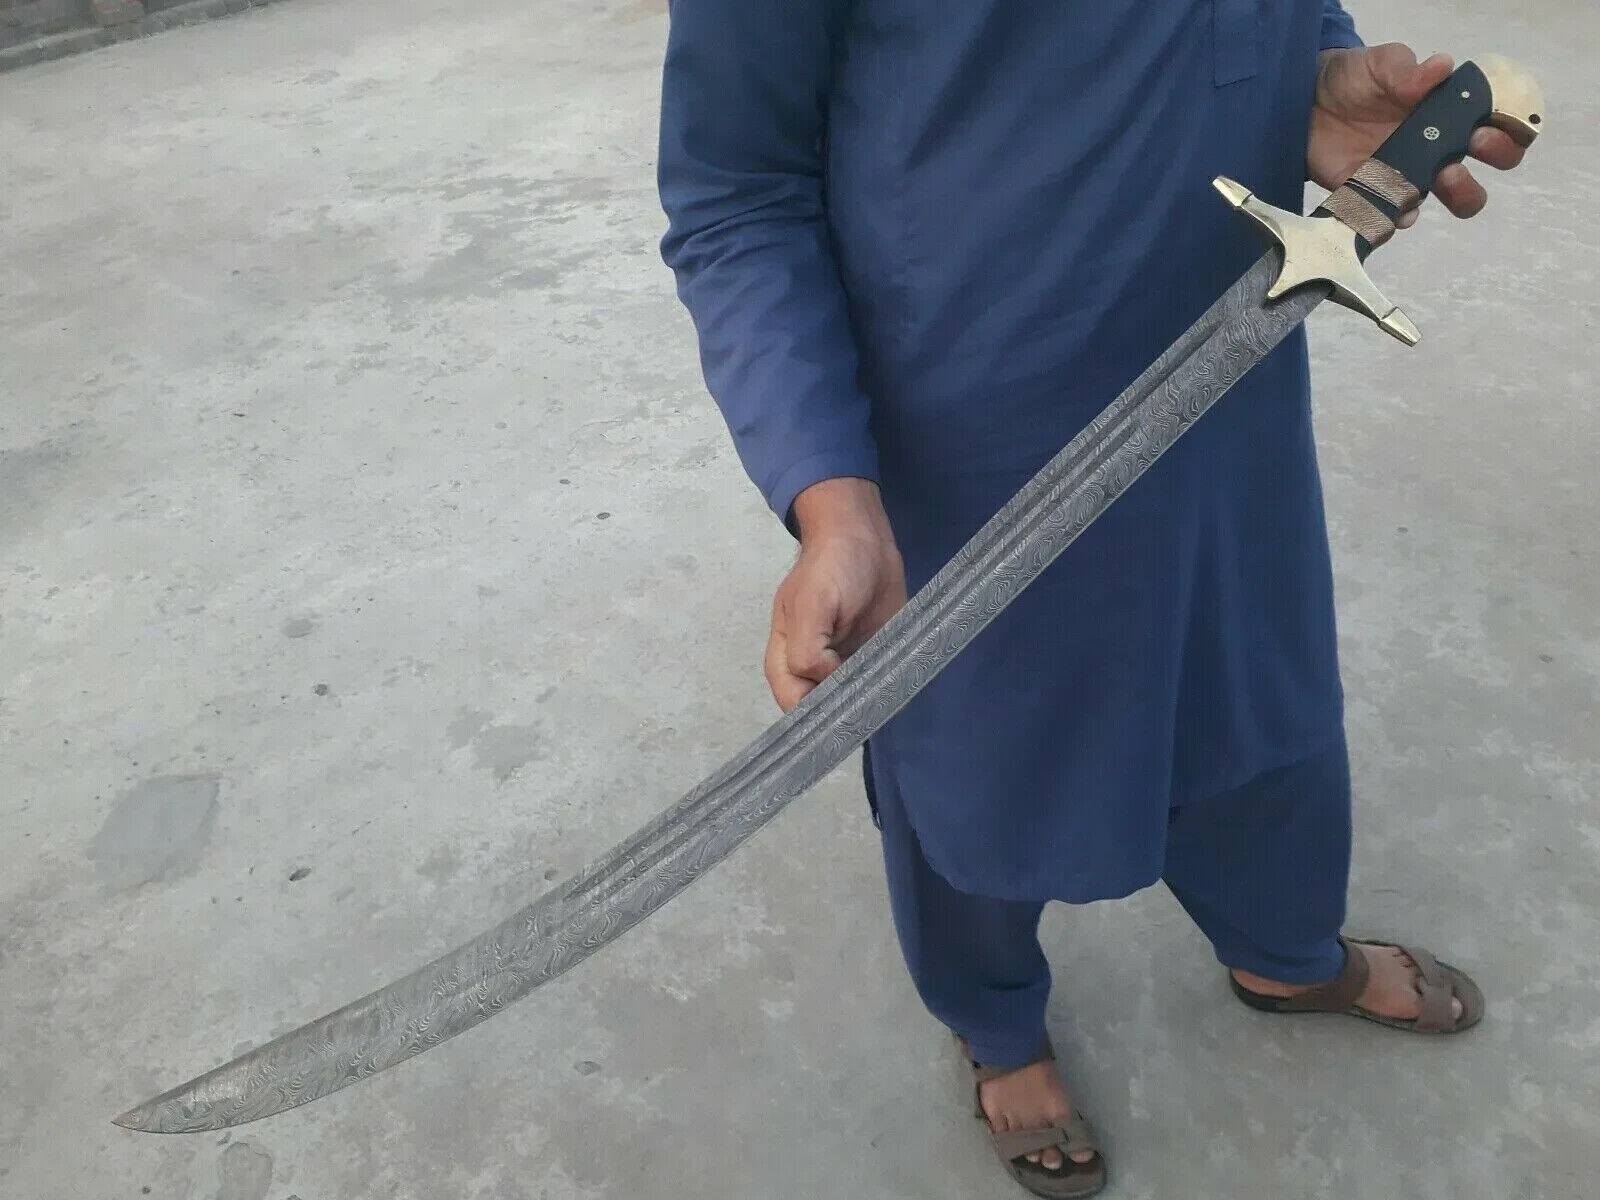 Handmade Damascus Steel Islamic Zulfiqar Sword, Shamshir With Leather Sheath.